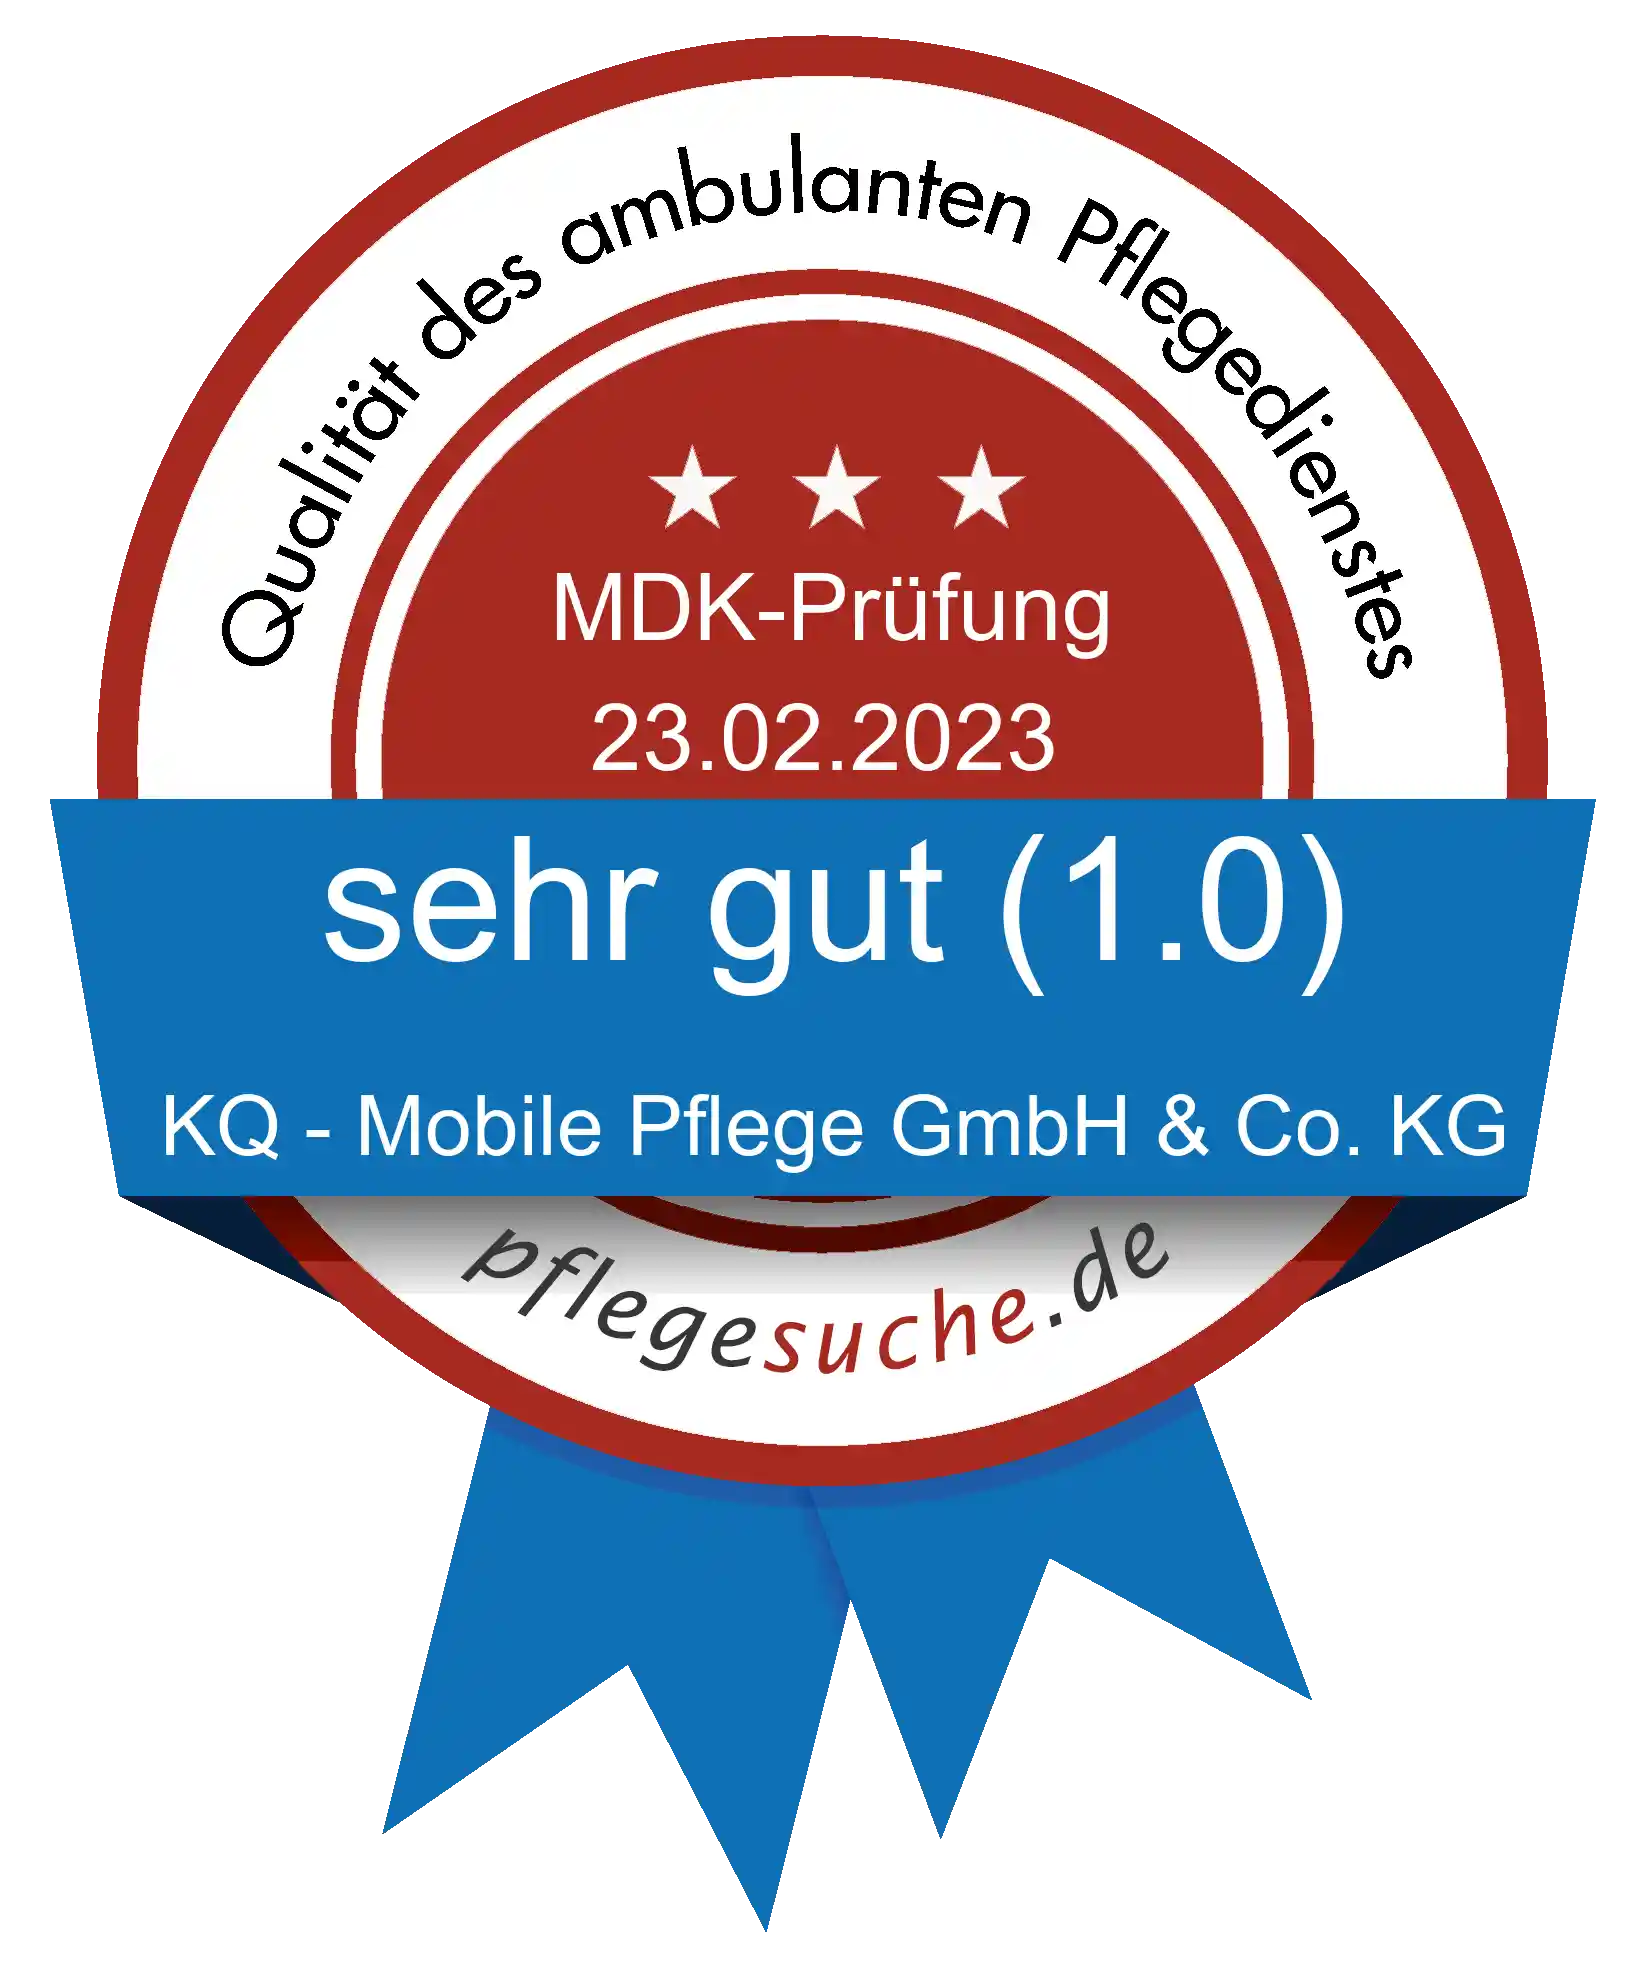 Siegel Benotung: KQ - Mobile Pflege GmbH & Co. KG